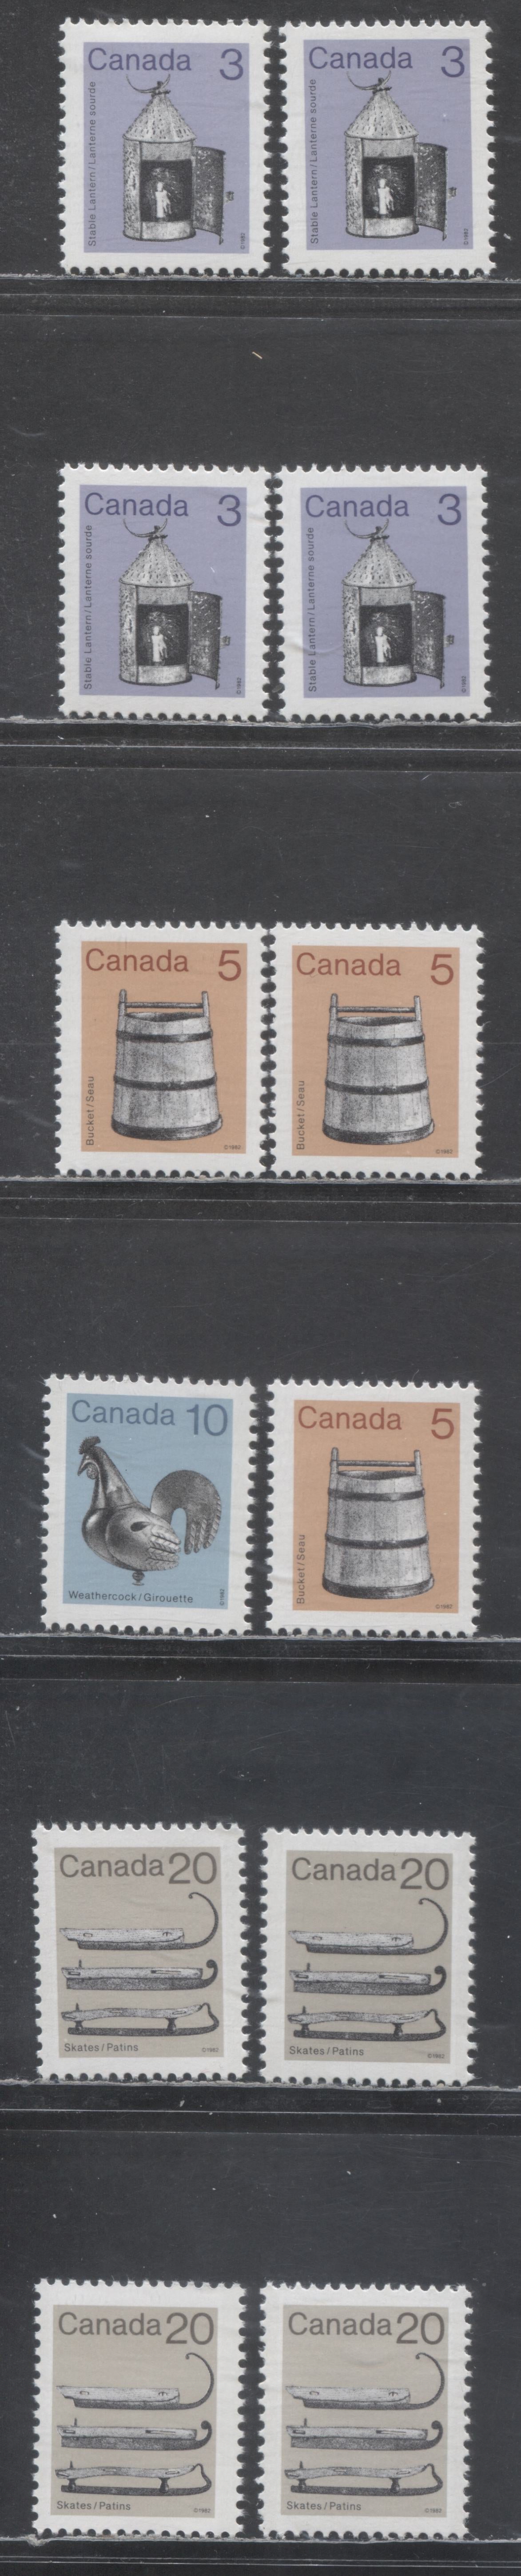 Lot 293 Canada #919iii,iv, 920ii,I, 921ii, 922ii,iii 3c-20c Flesh/Gray Brown & Multicolored Lantern-Ice Skates, 1982-1897 Low-Value Artifact Definitives, 12 VFNH Singles On DF/LF, LF/LF, LF/F & Unlisted LF/MF7 Rolland Papers